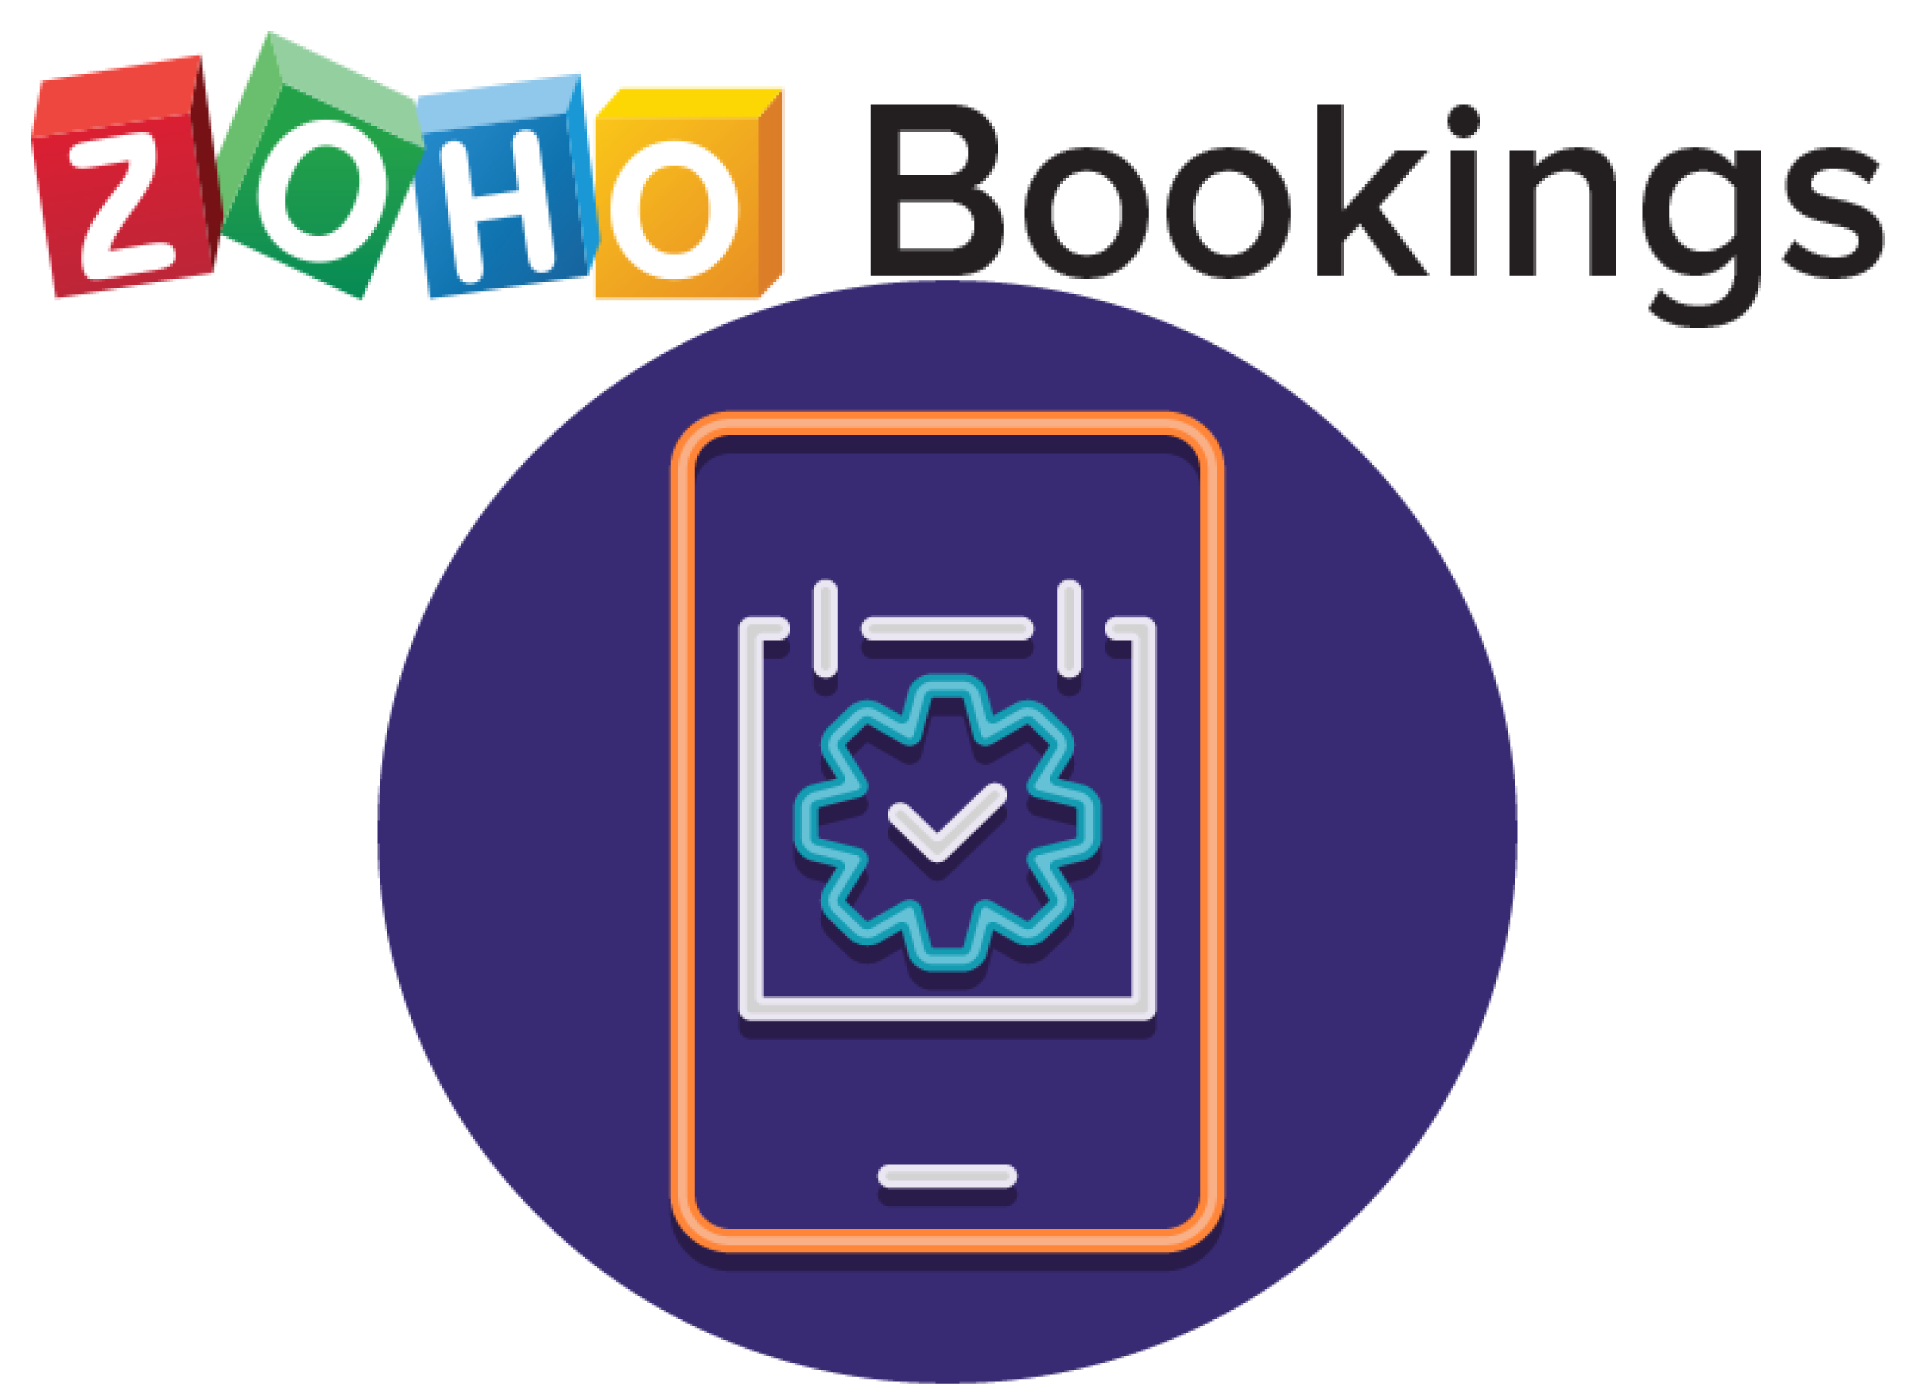 zoho bookings vs calendly, zoho vs calendly, calendly vs bookings, calendly bookings